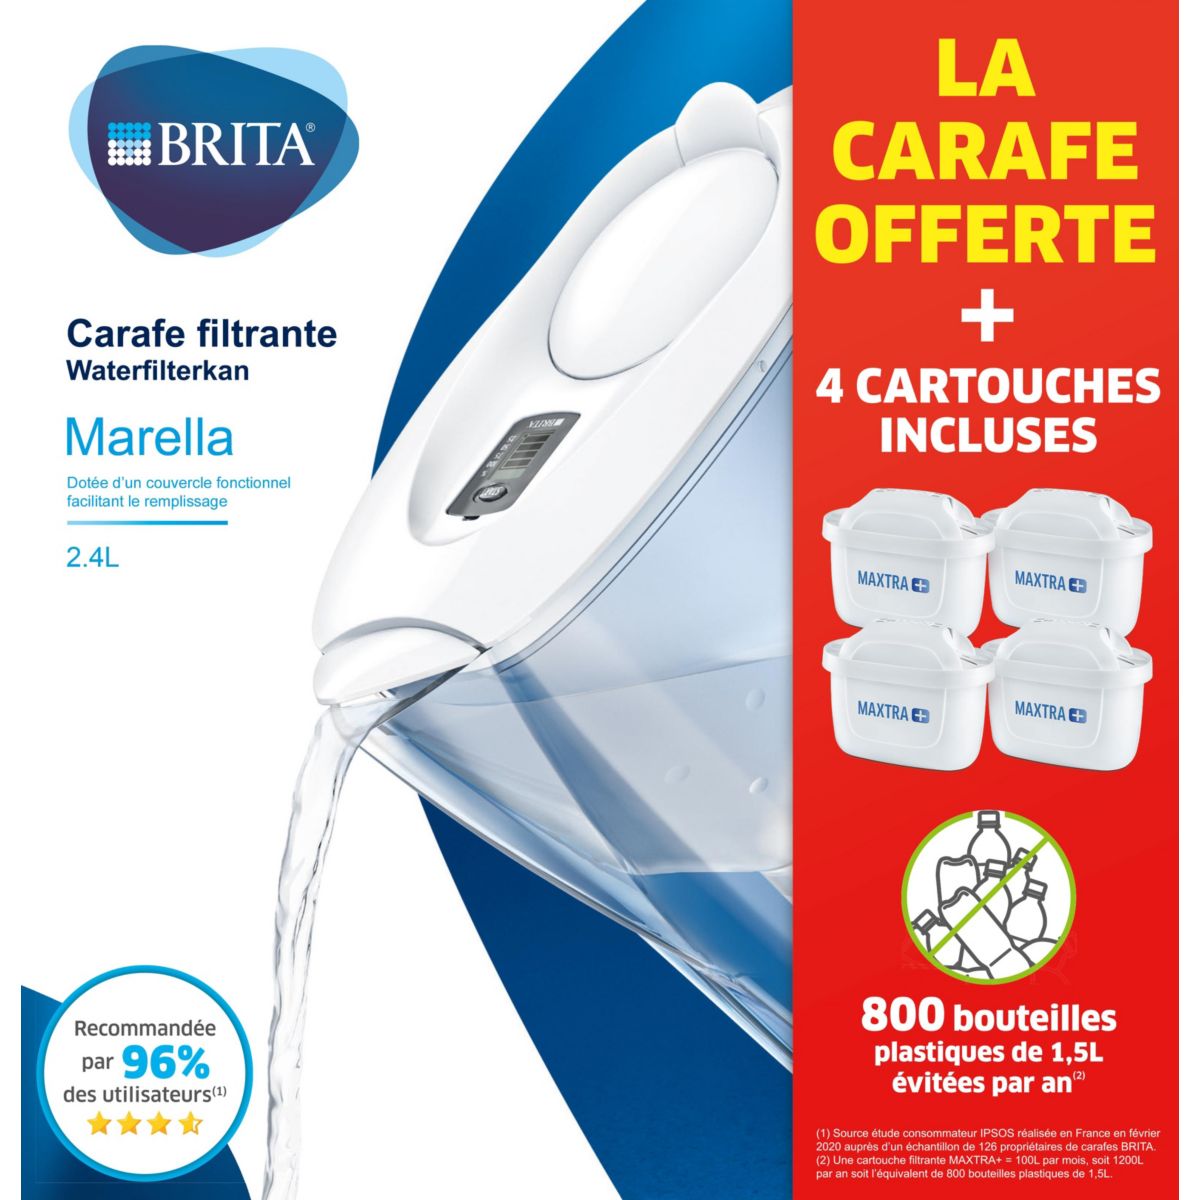 Carafe d'eau filtrante Brita Marella blanche + 1 cartouche